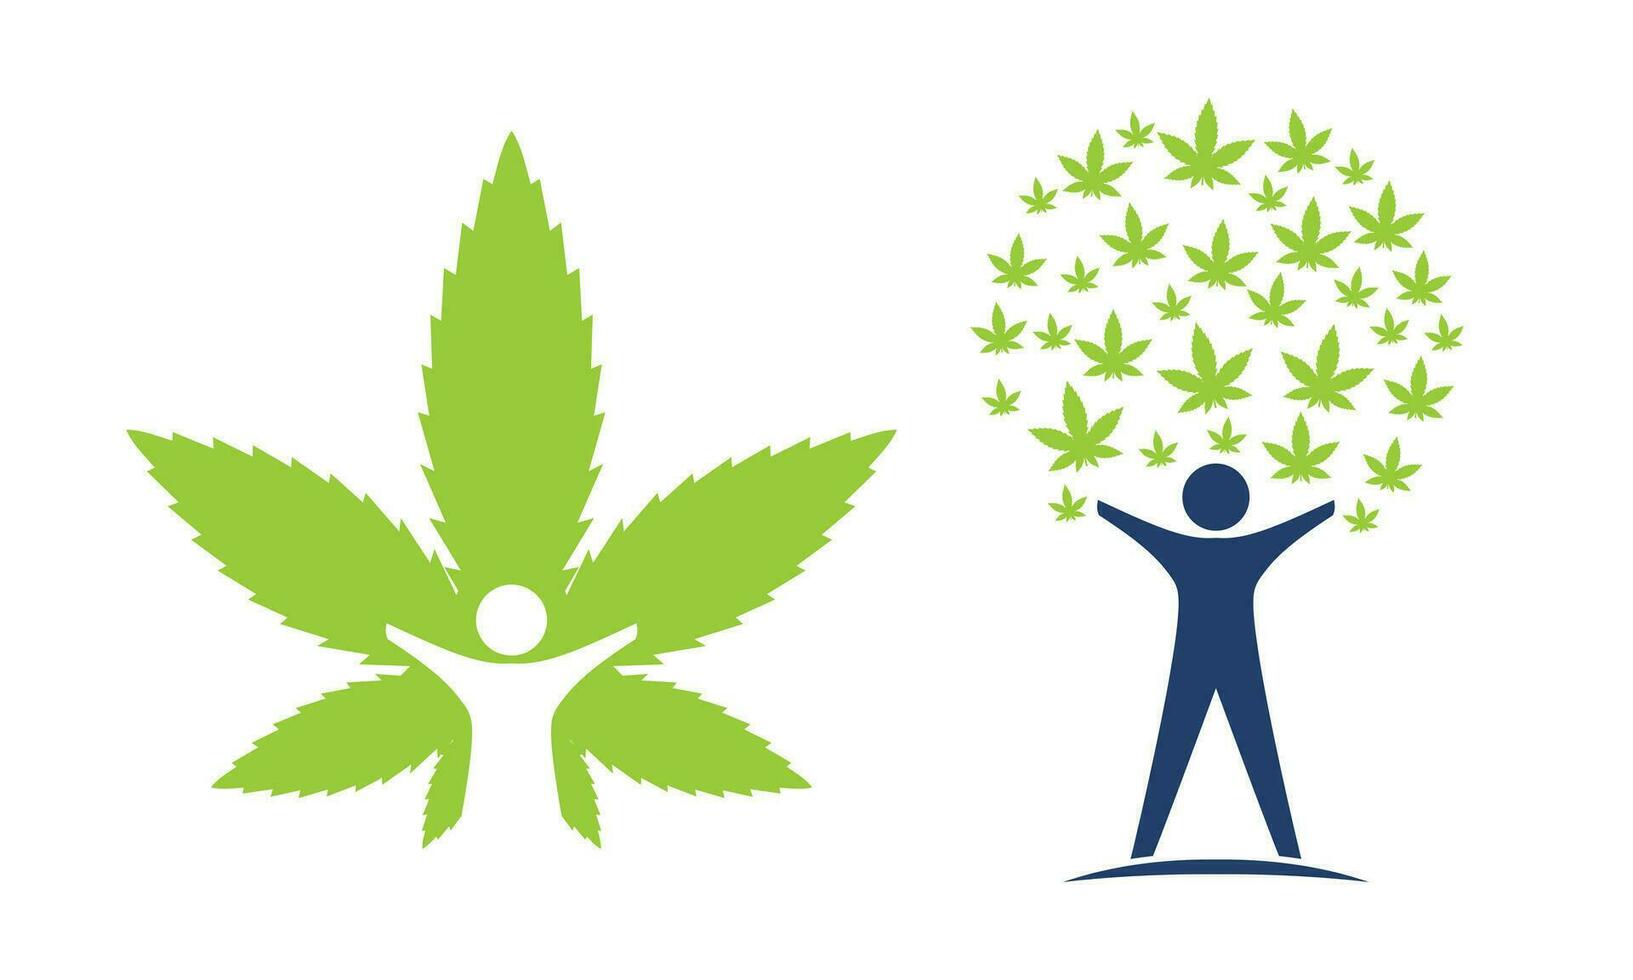 Mariuhana or cannabis leaf symbol cannabis medical sign with human icon,  vector illustration